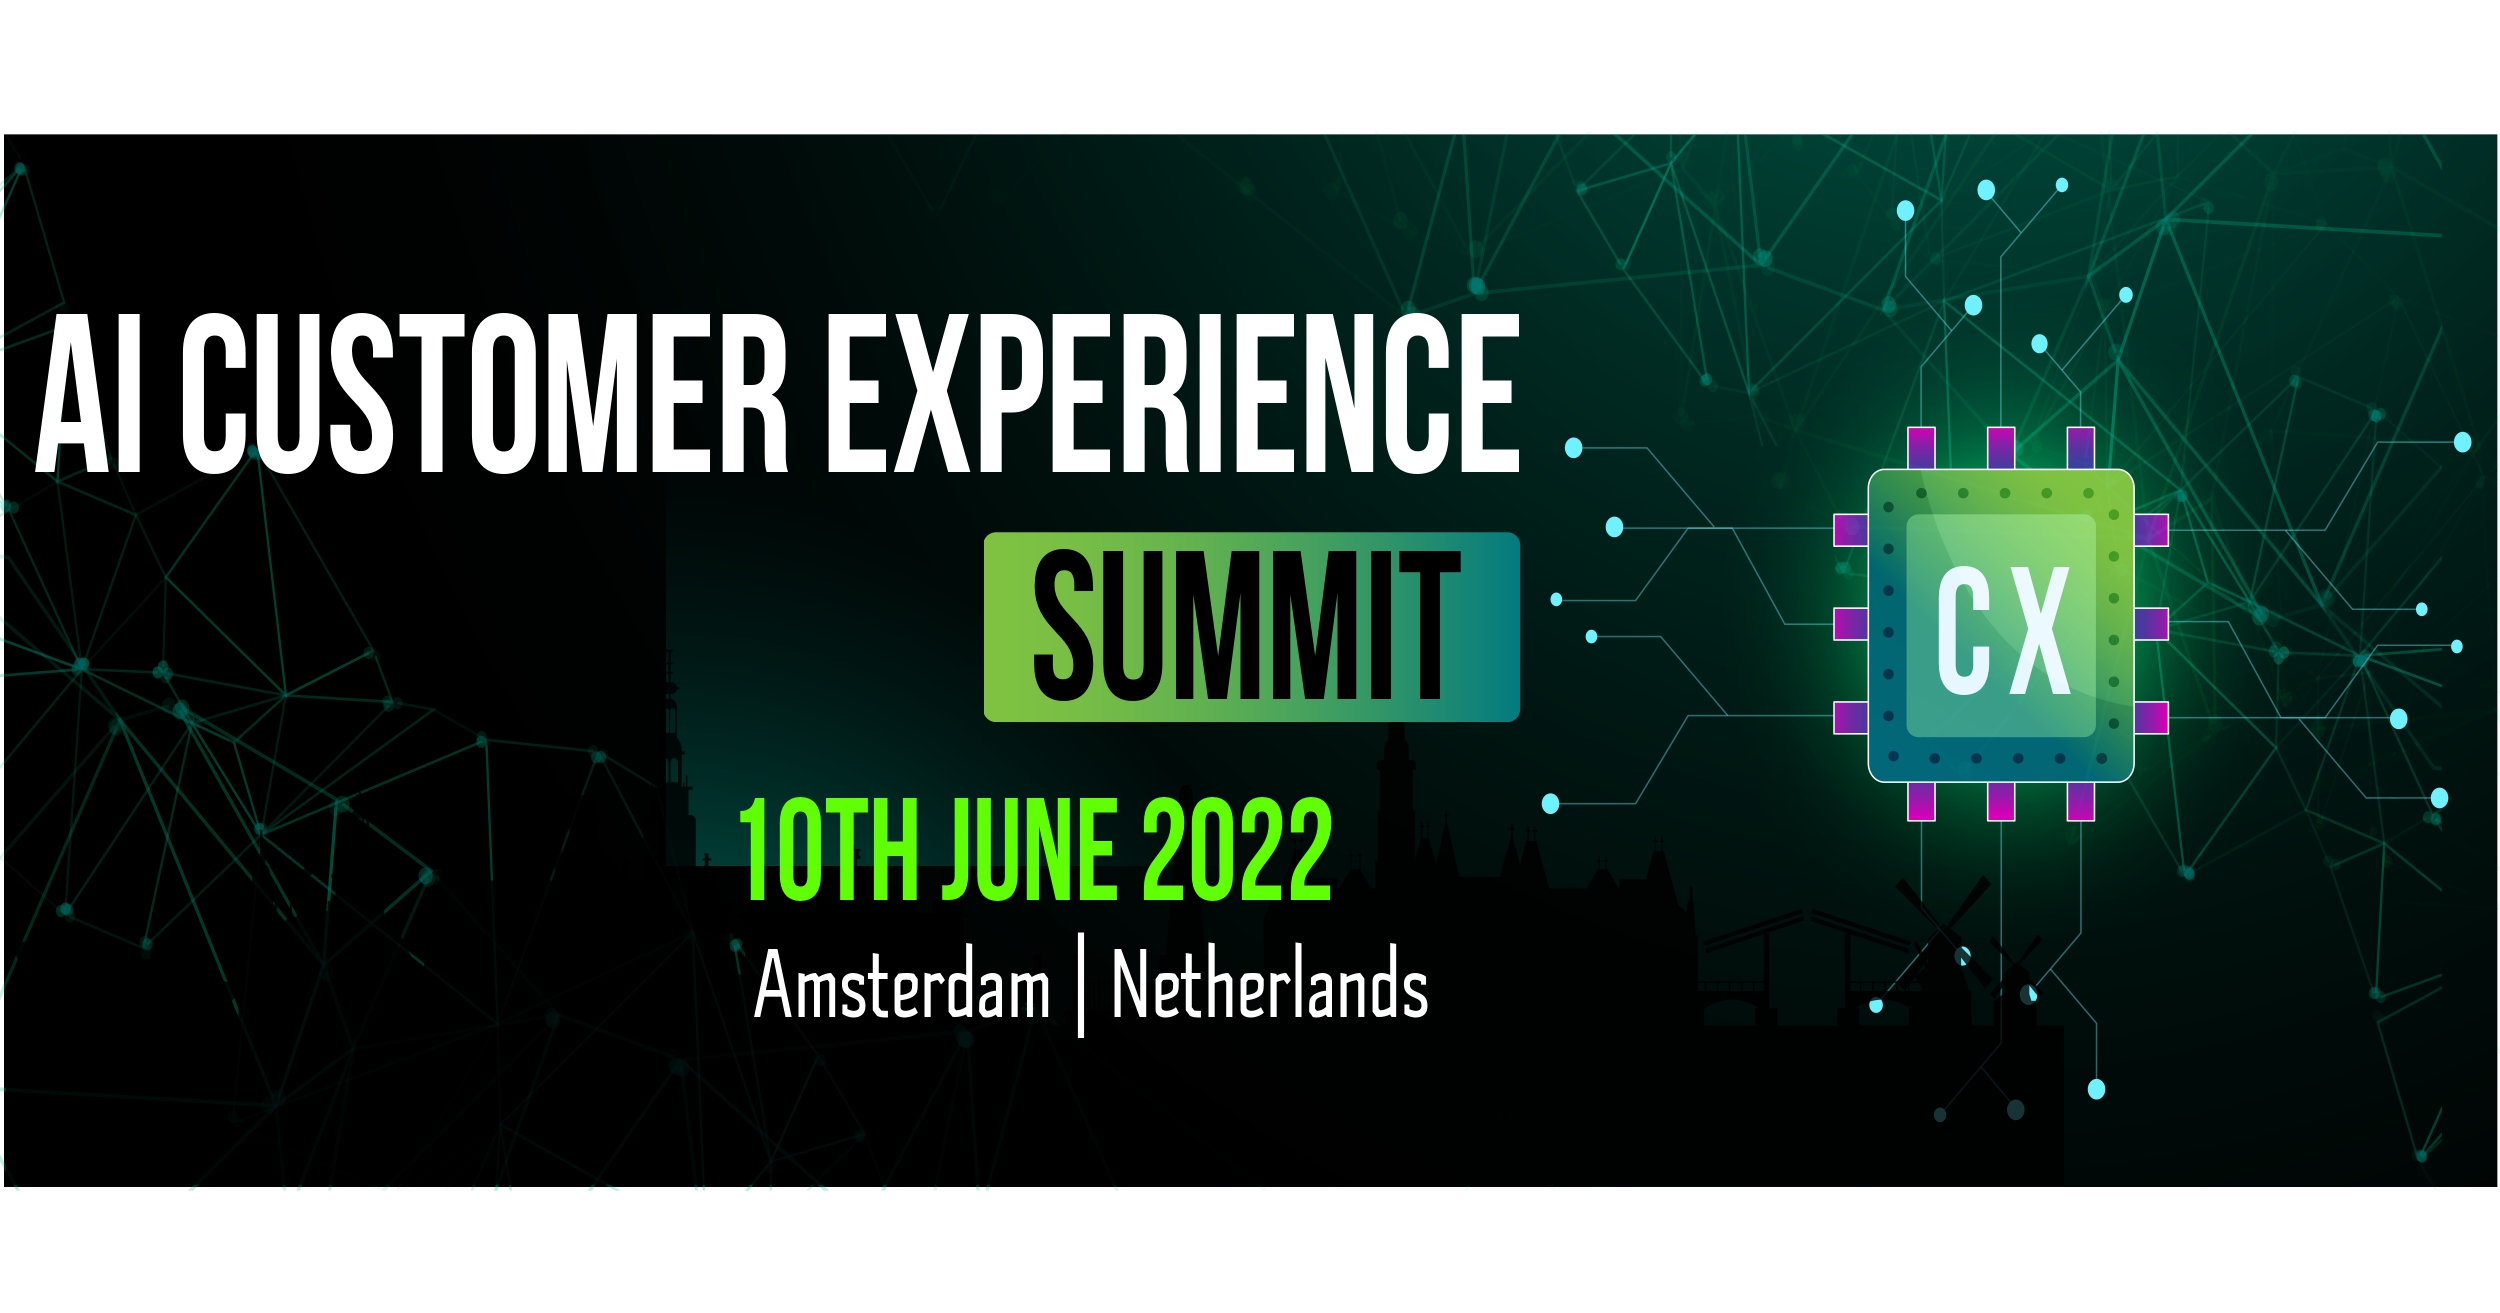 AI Customer Experience Summit organized by Thinkin Events Ltd